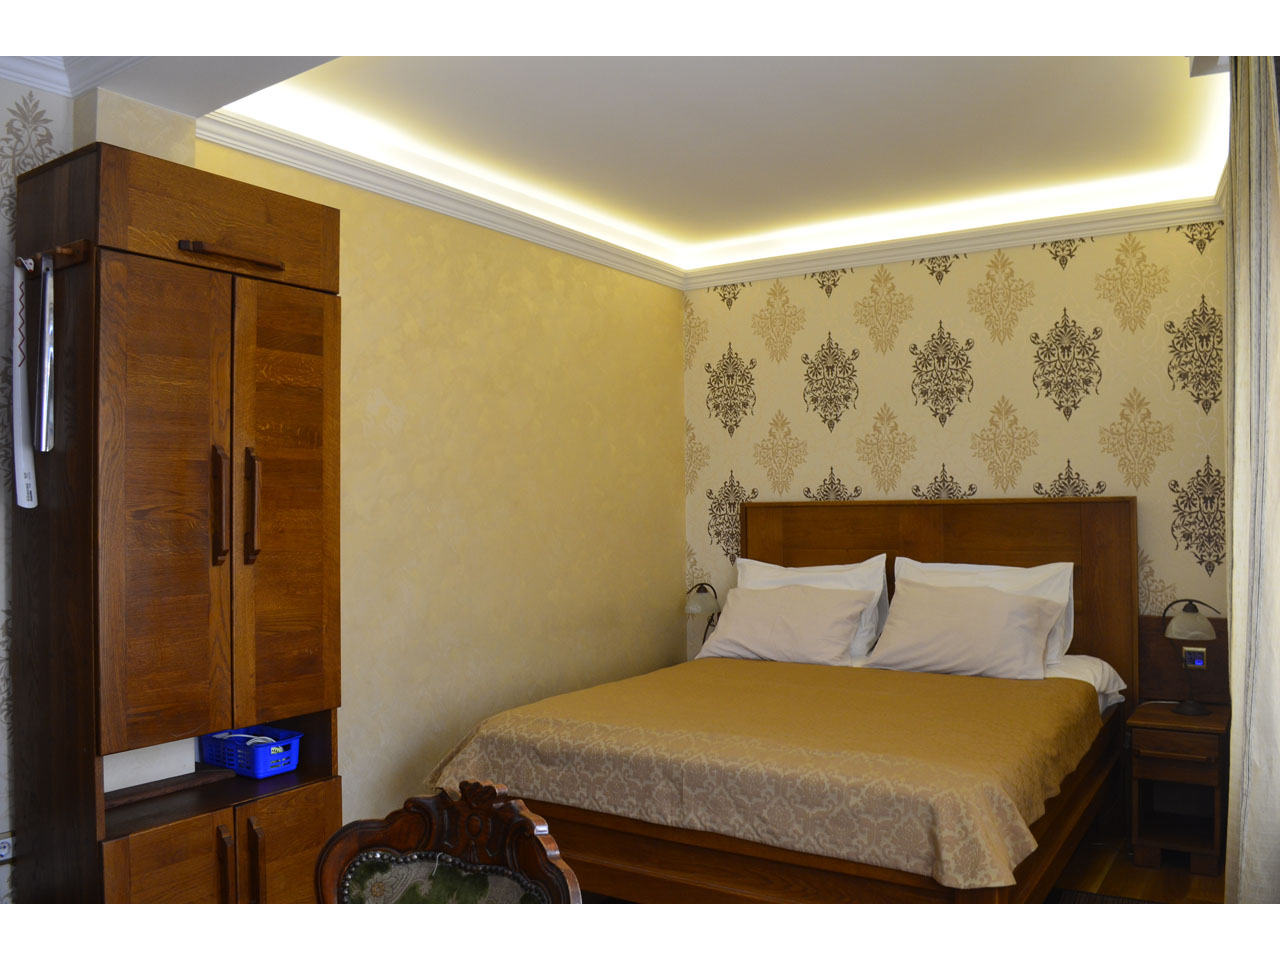 RESTAURANT JOVANJE Accommodation, room renting Belgrade - Photo 4